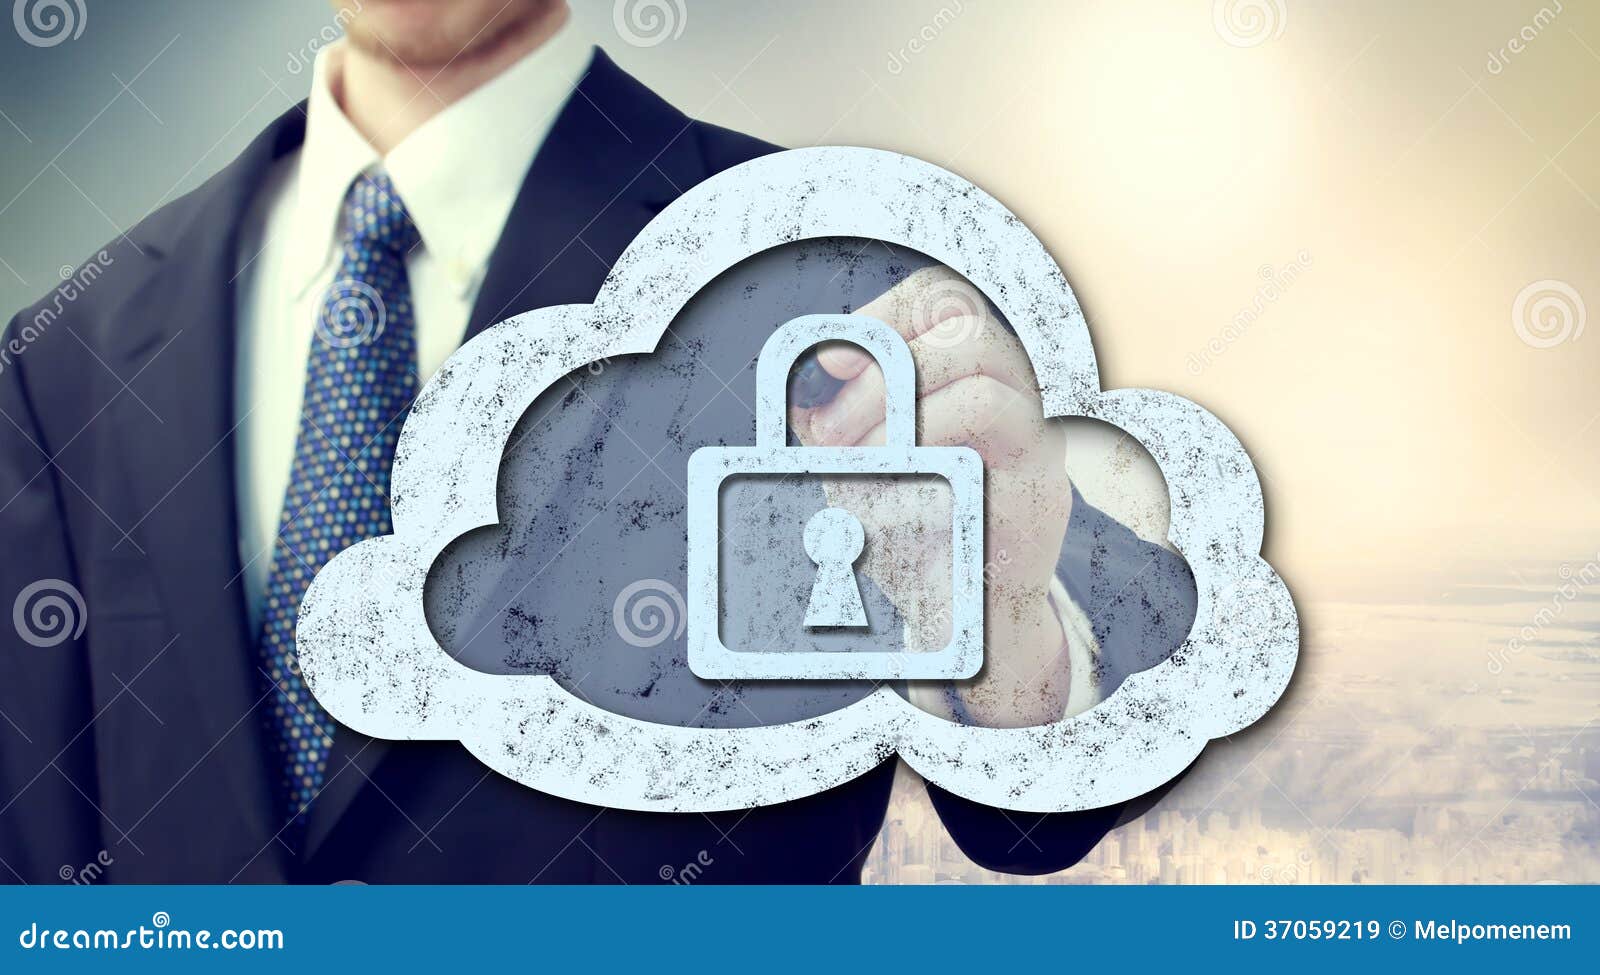 Secure Online Cloud Computing Concept Stock Image - Image of design